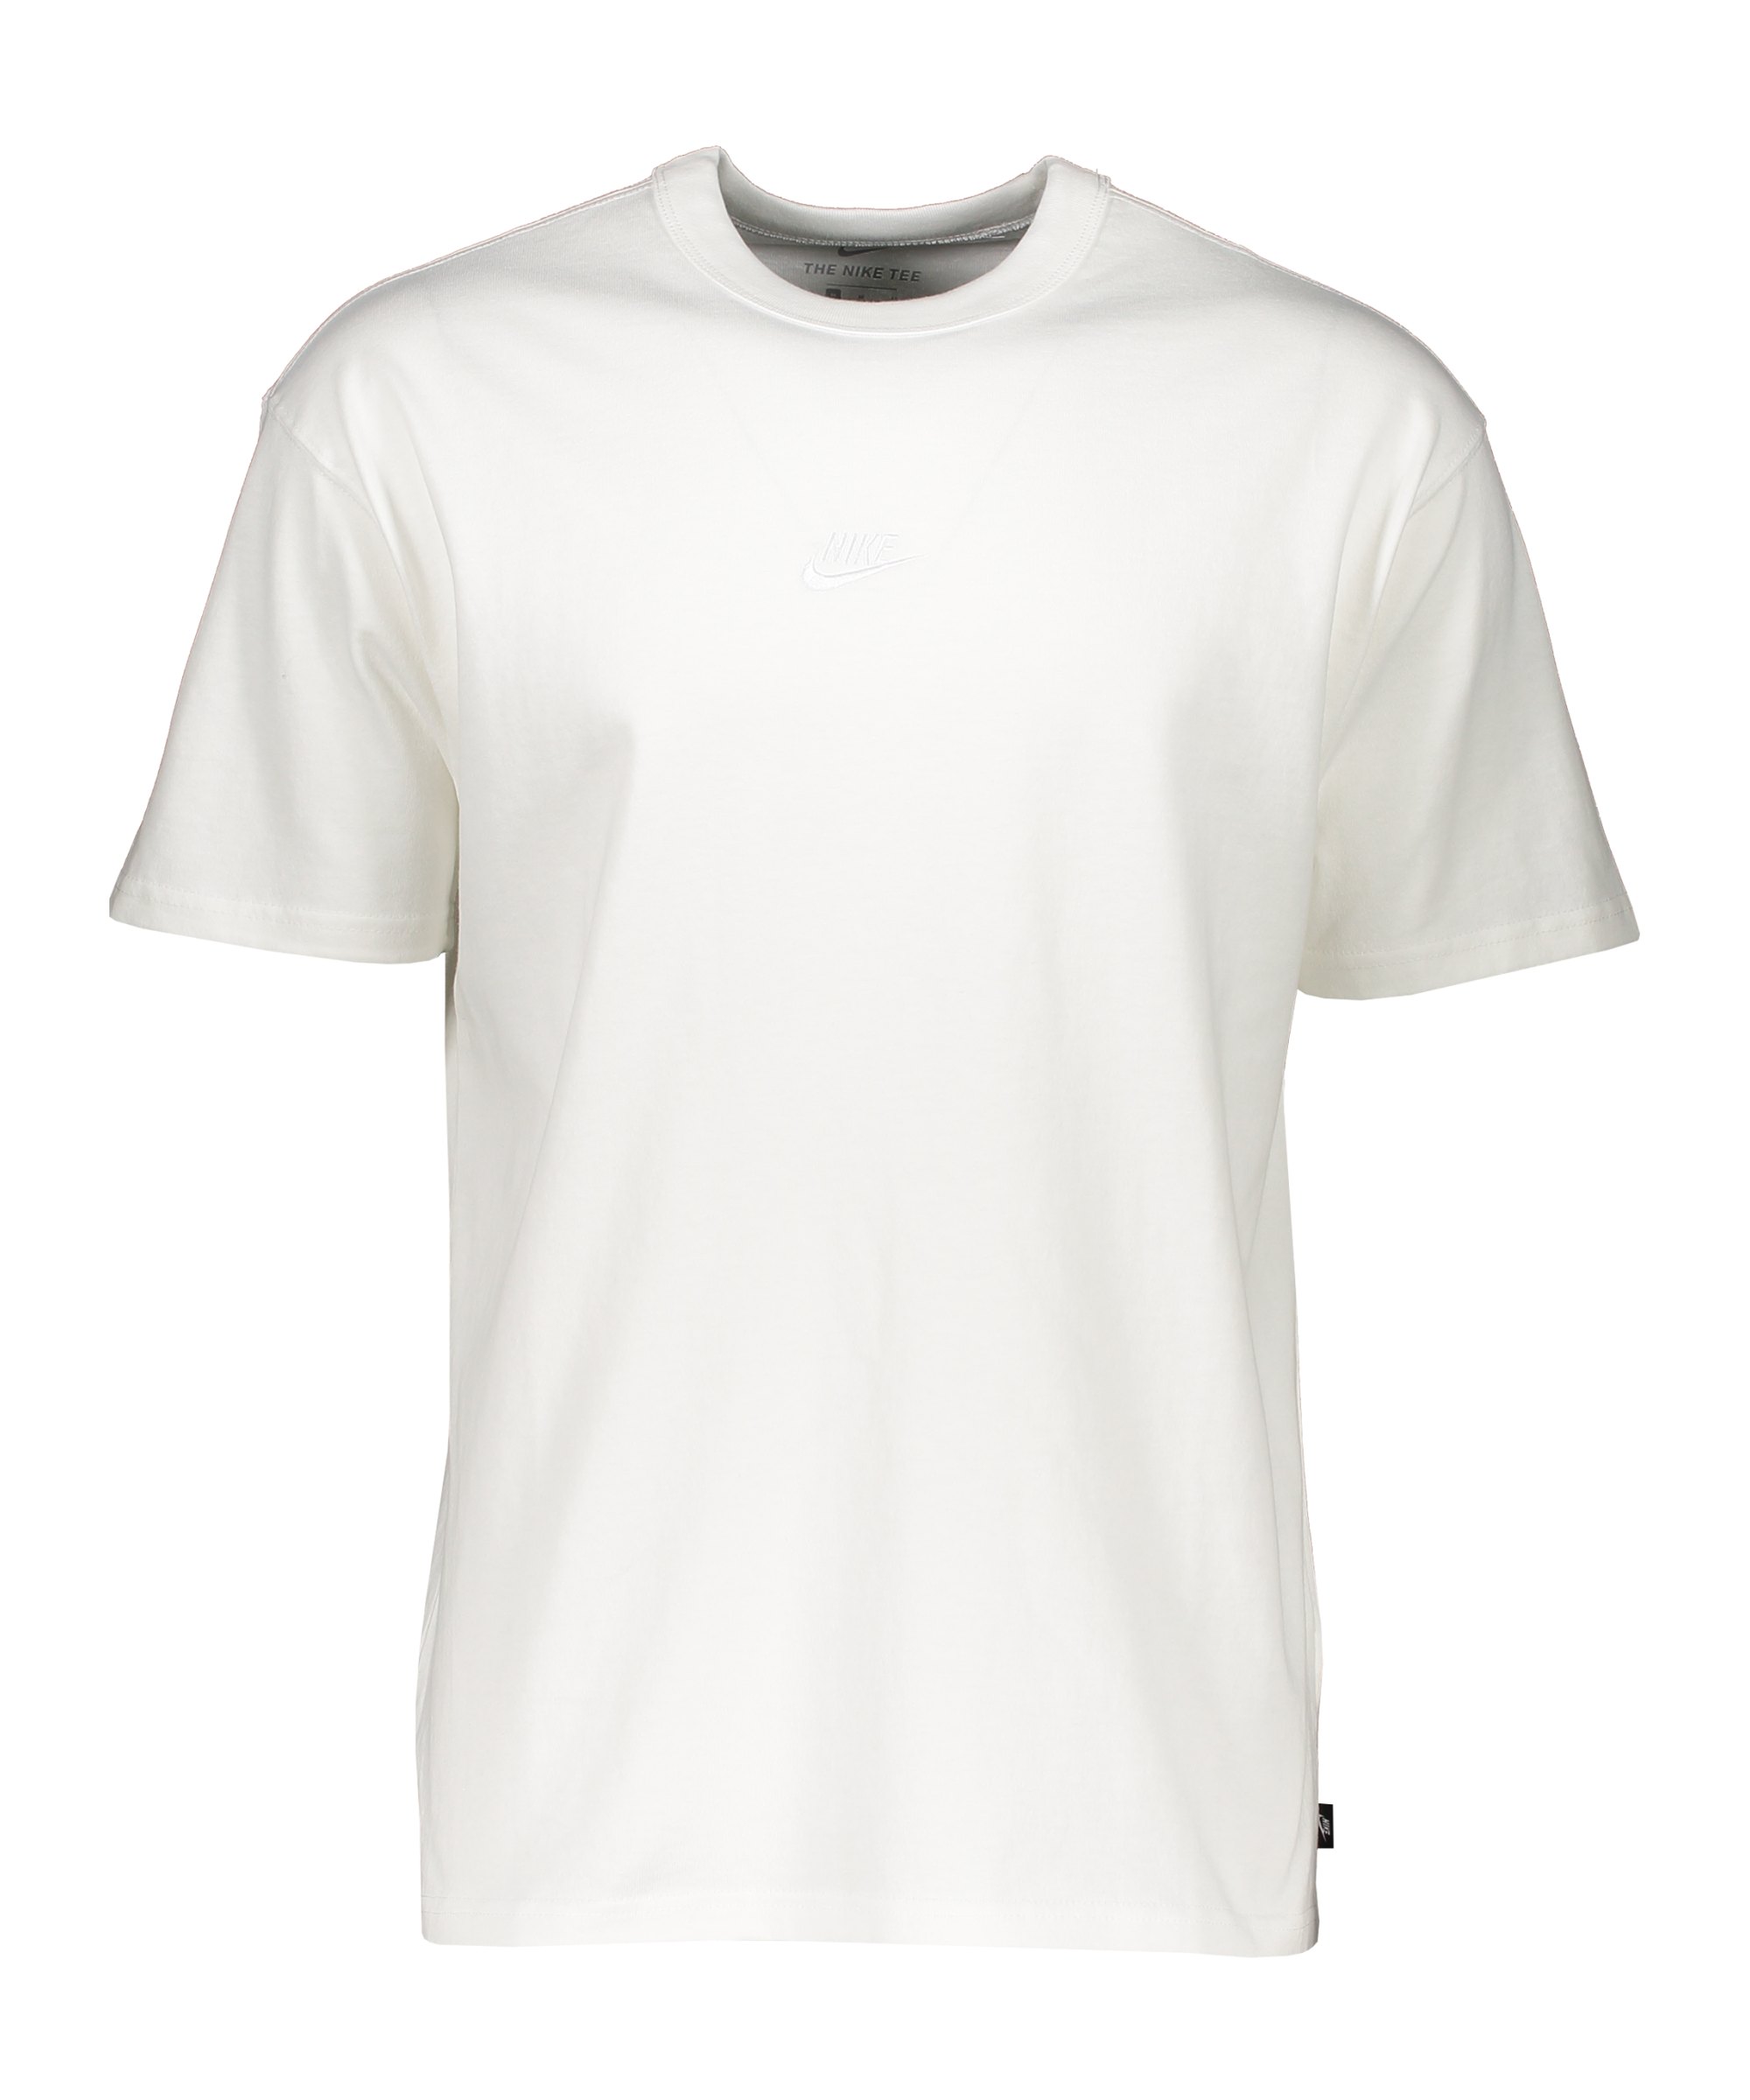 Nike Premium Essential T-Shirt Weiss F100 - weiss